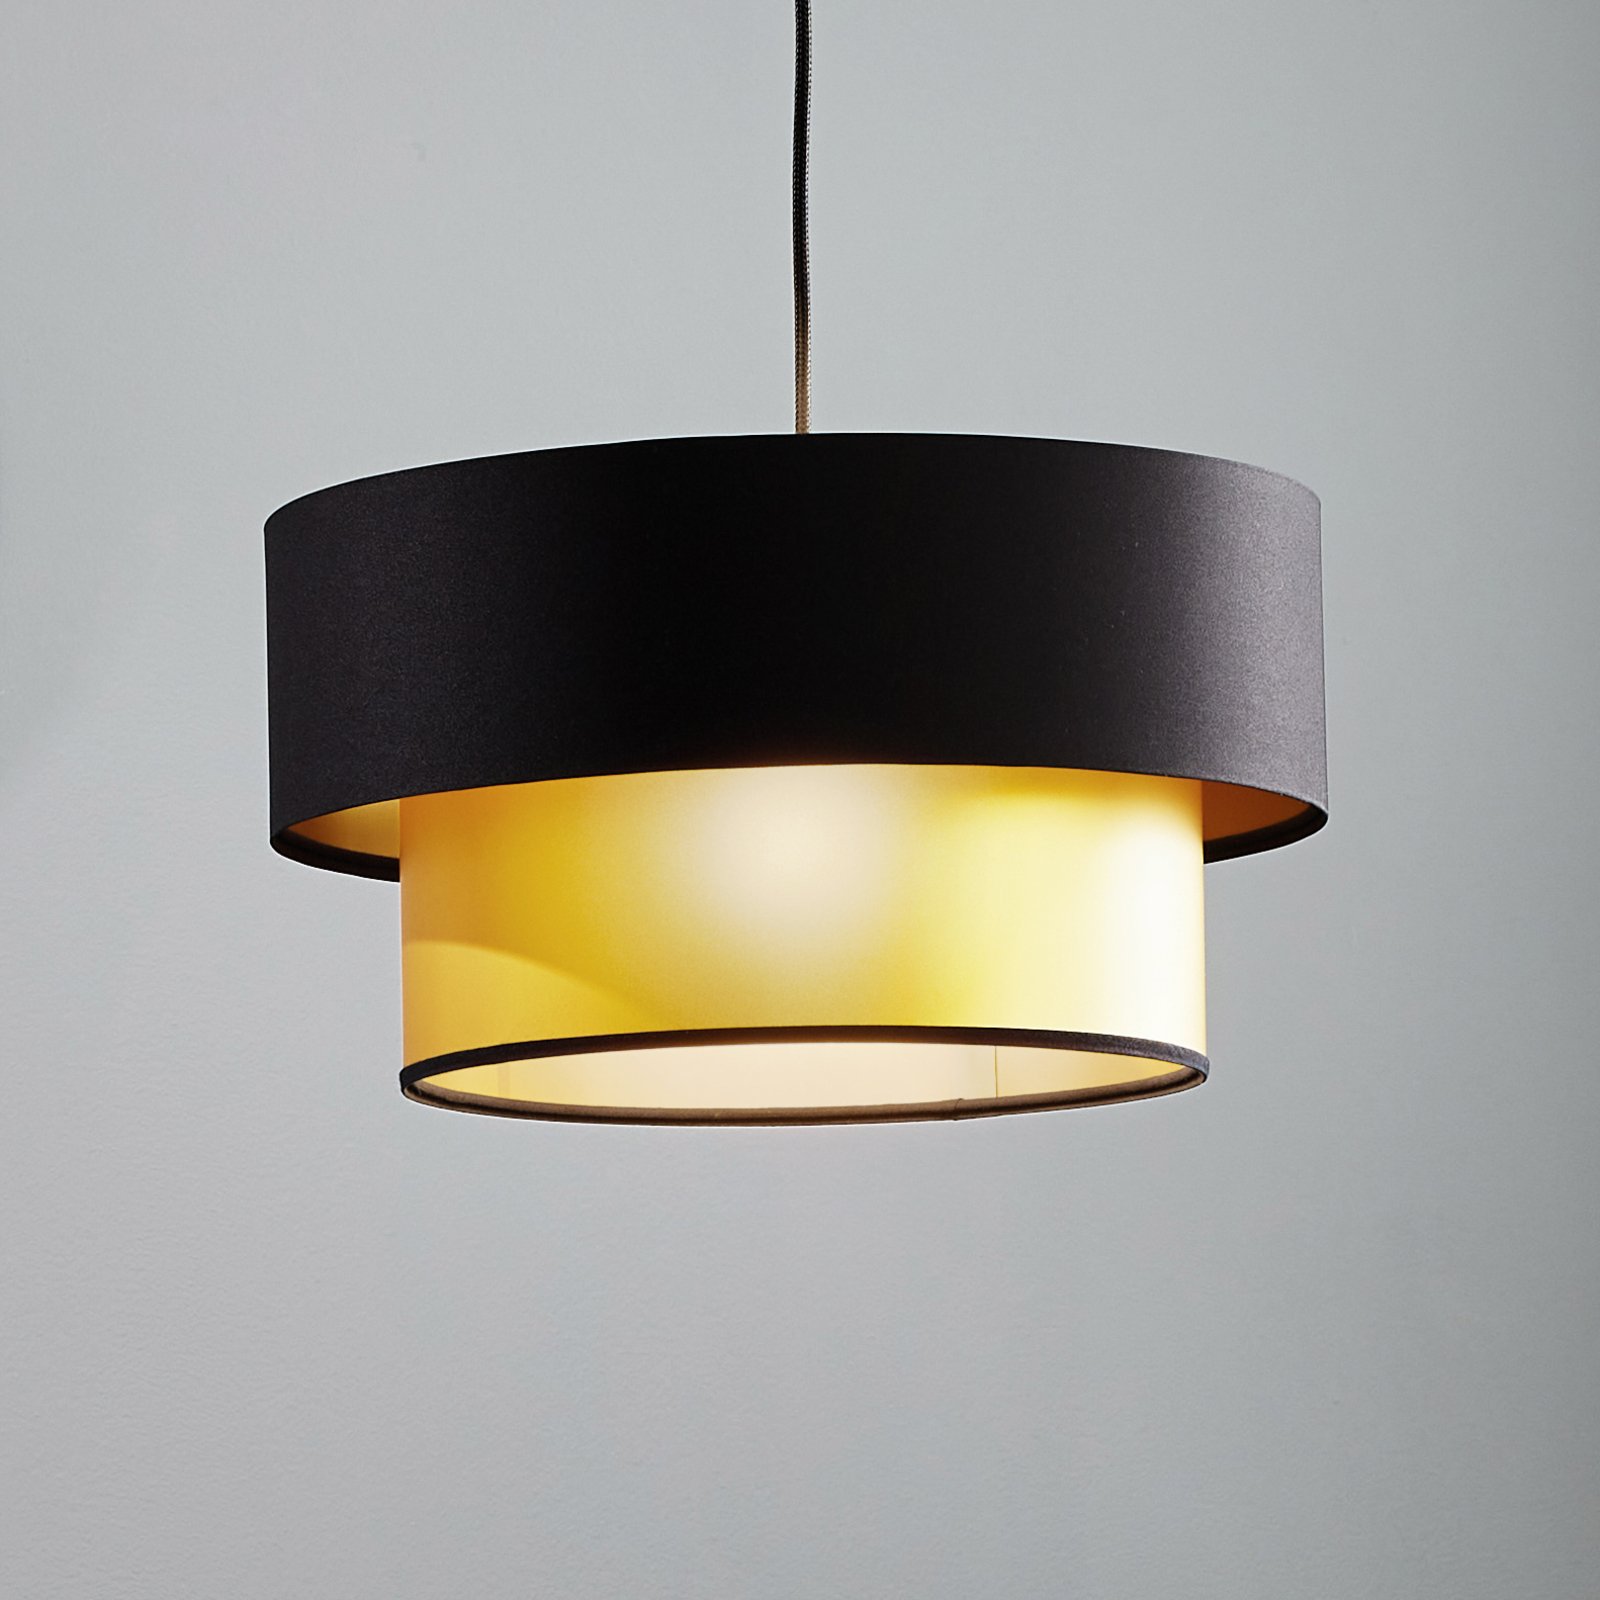 Hanglamp Dorina, zwart/goud, Ø 40cm